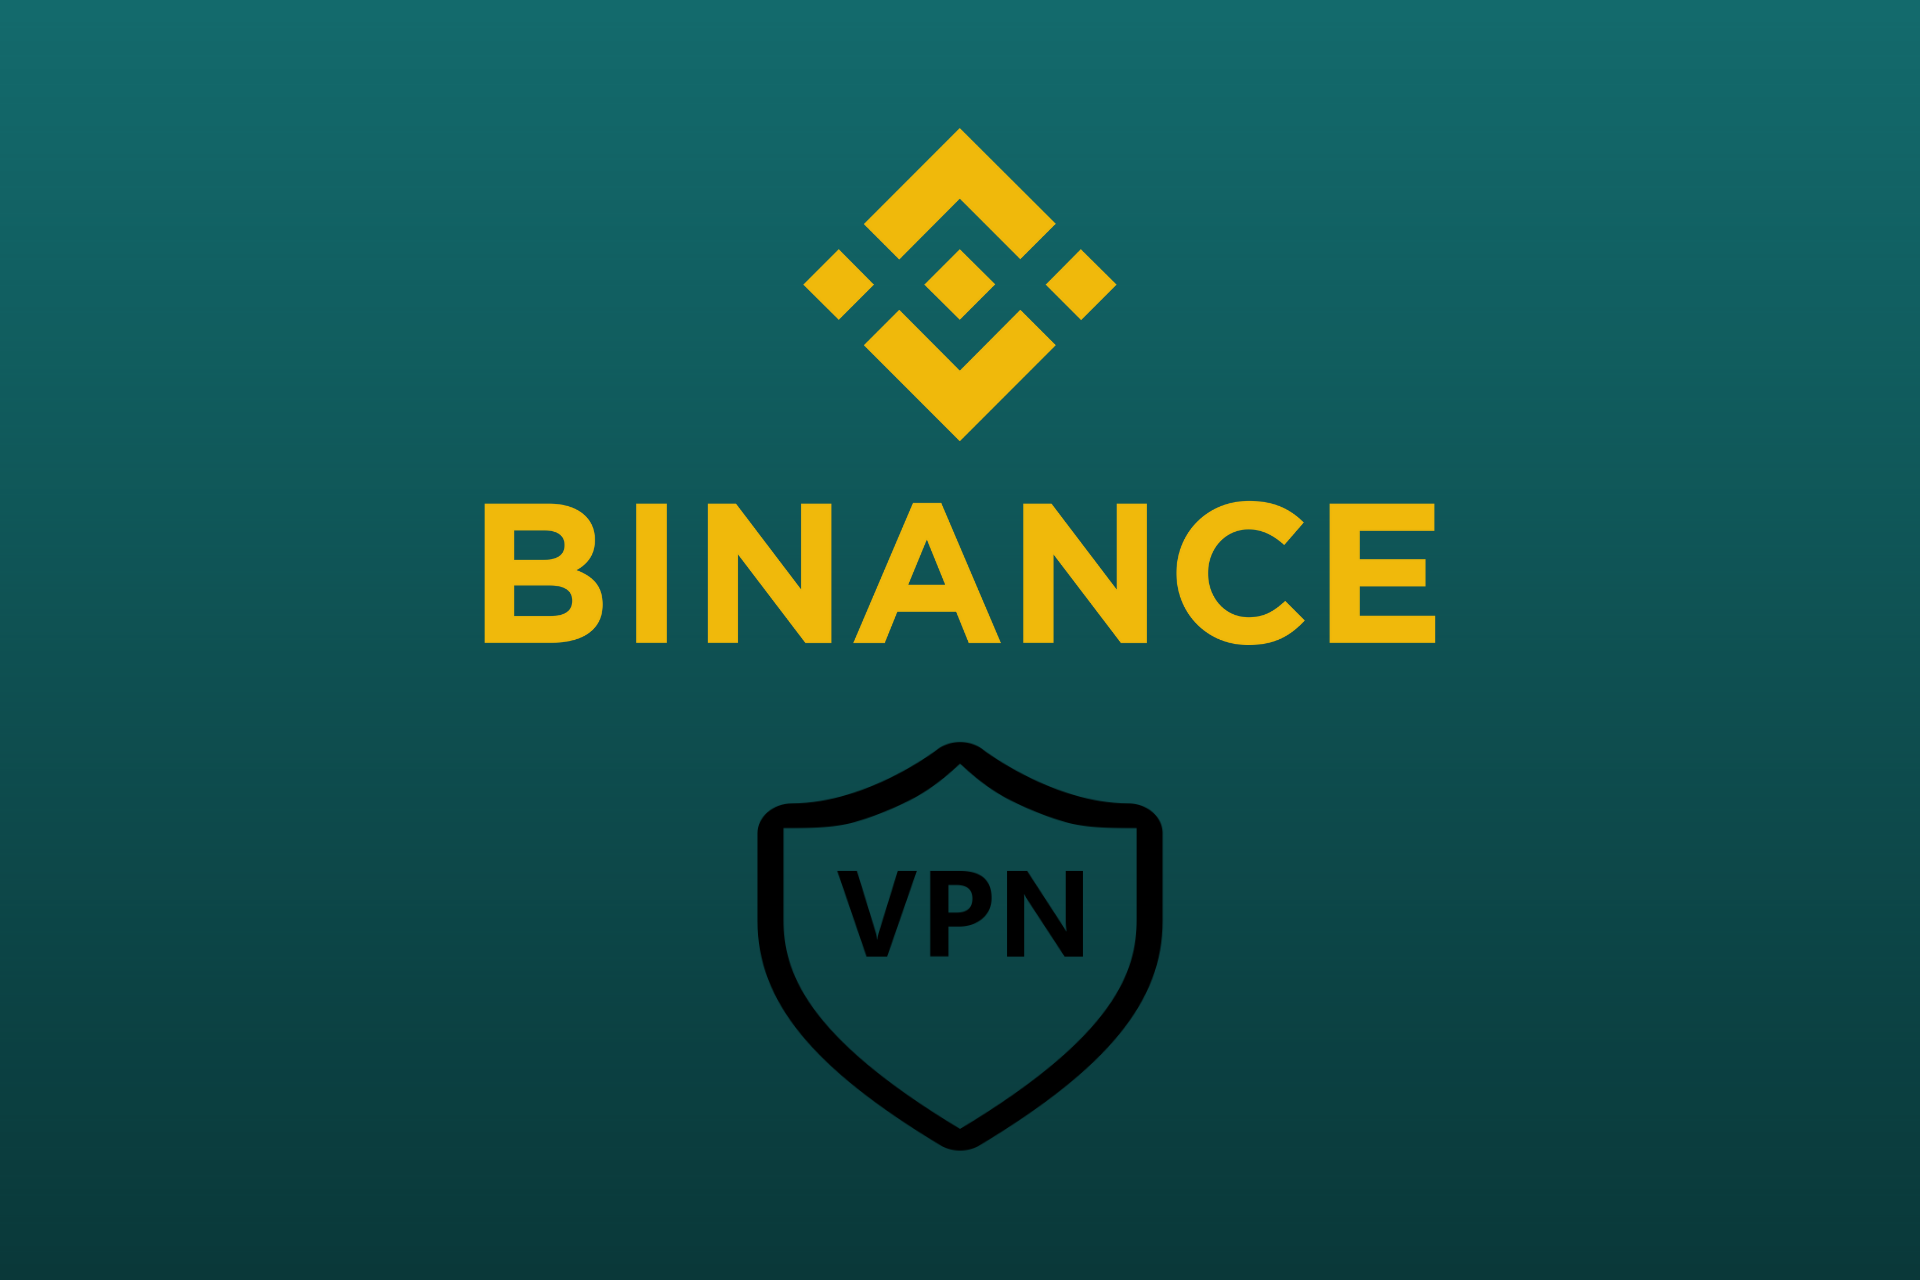 Fix Binance not working with VPN